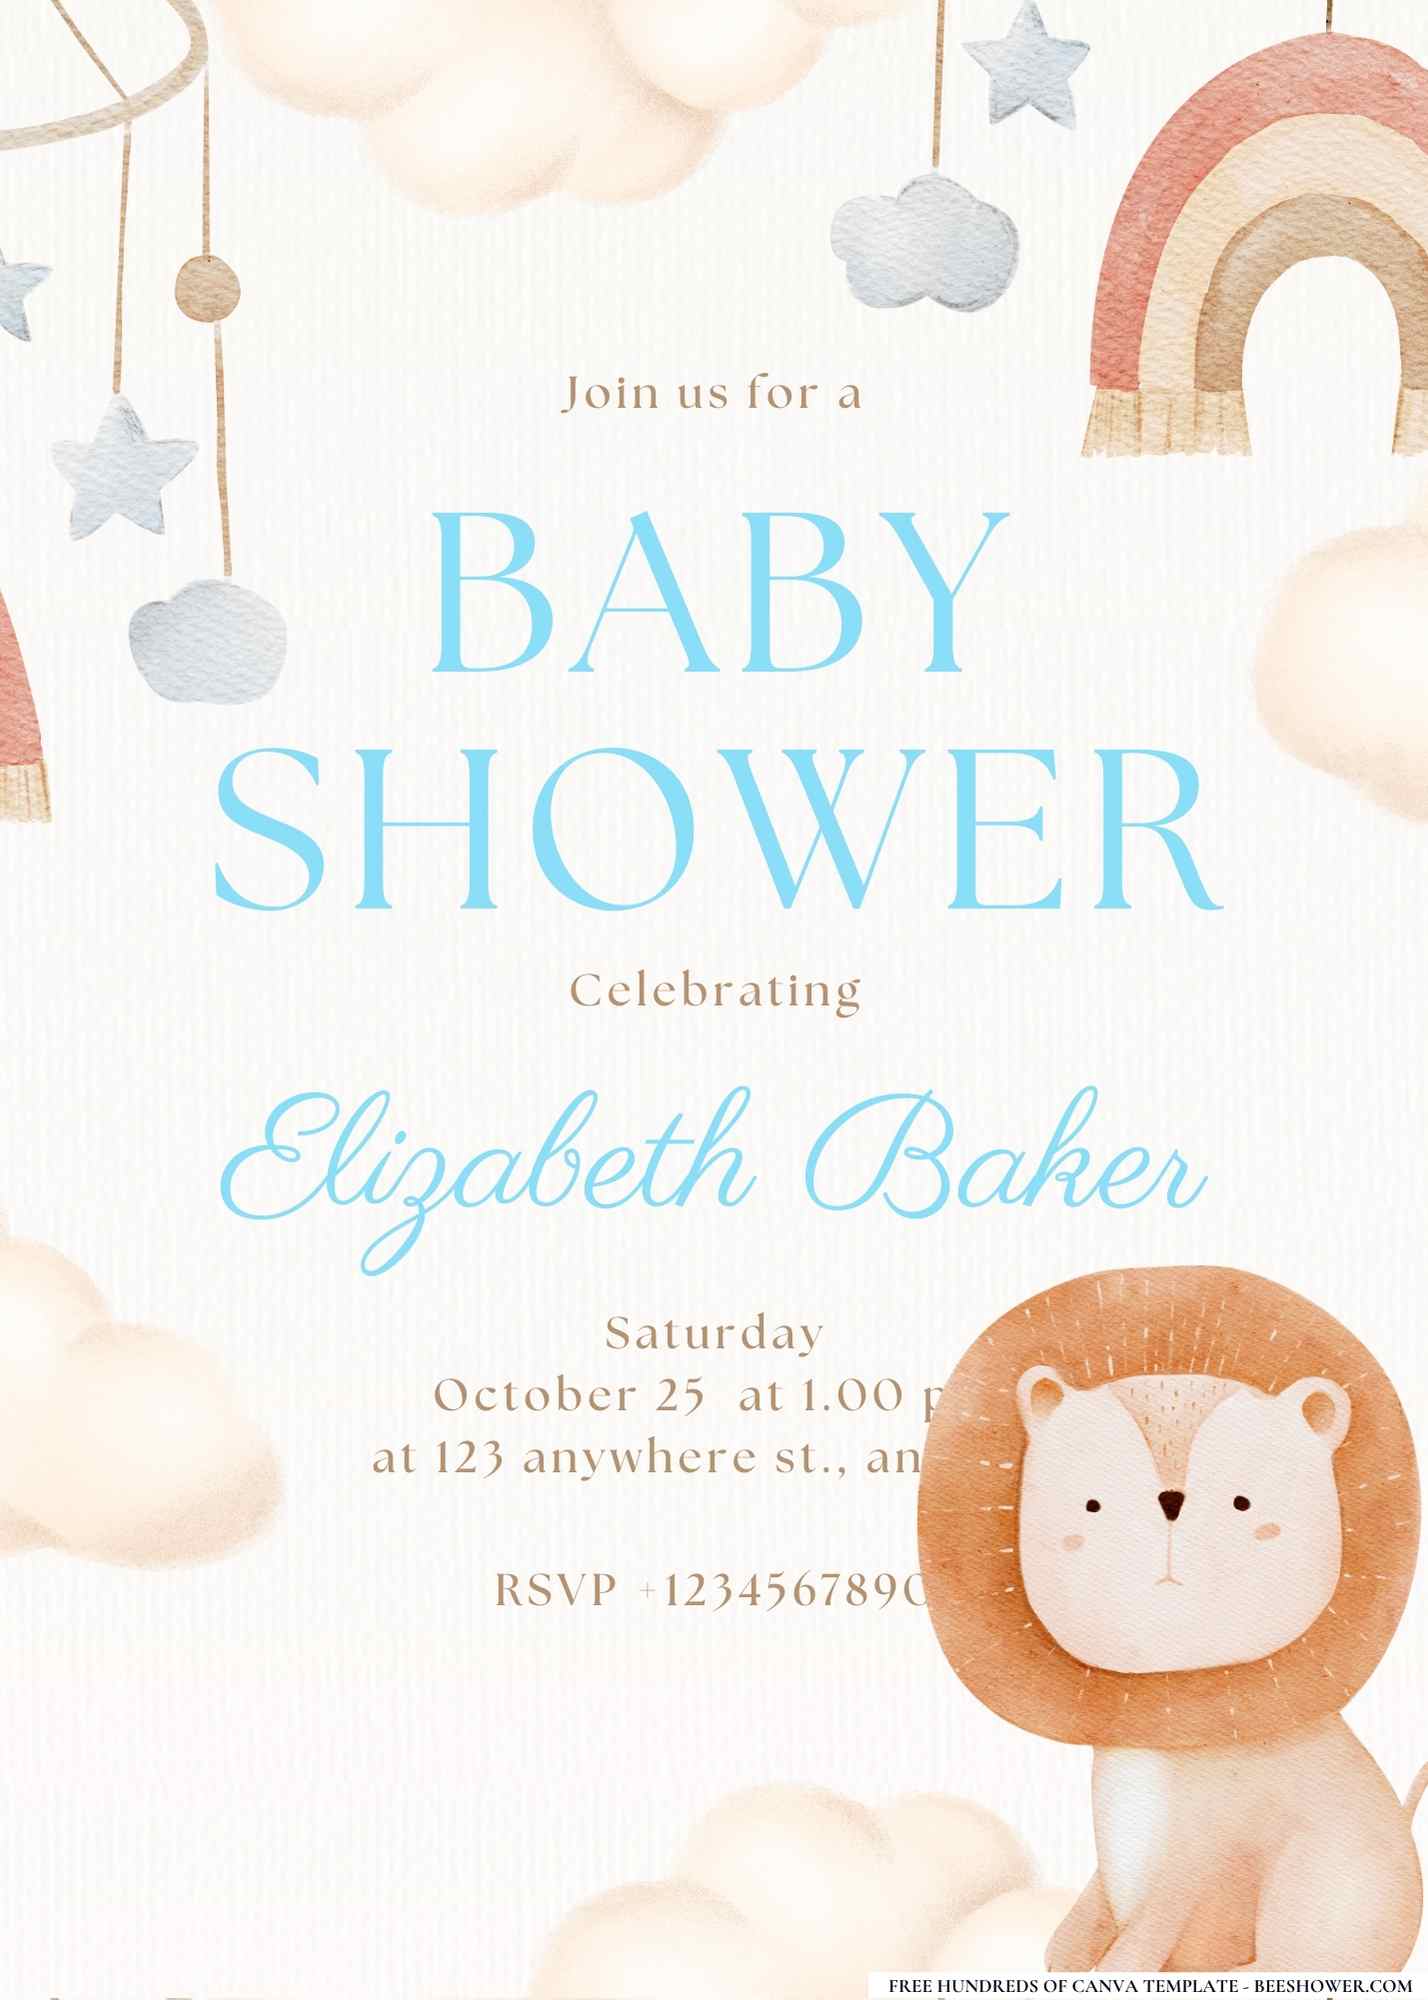 Bohemian Chic Baby Shower Invitation